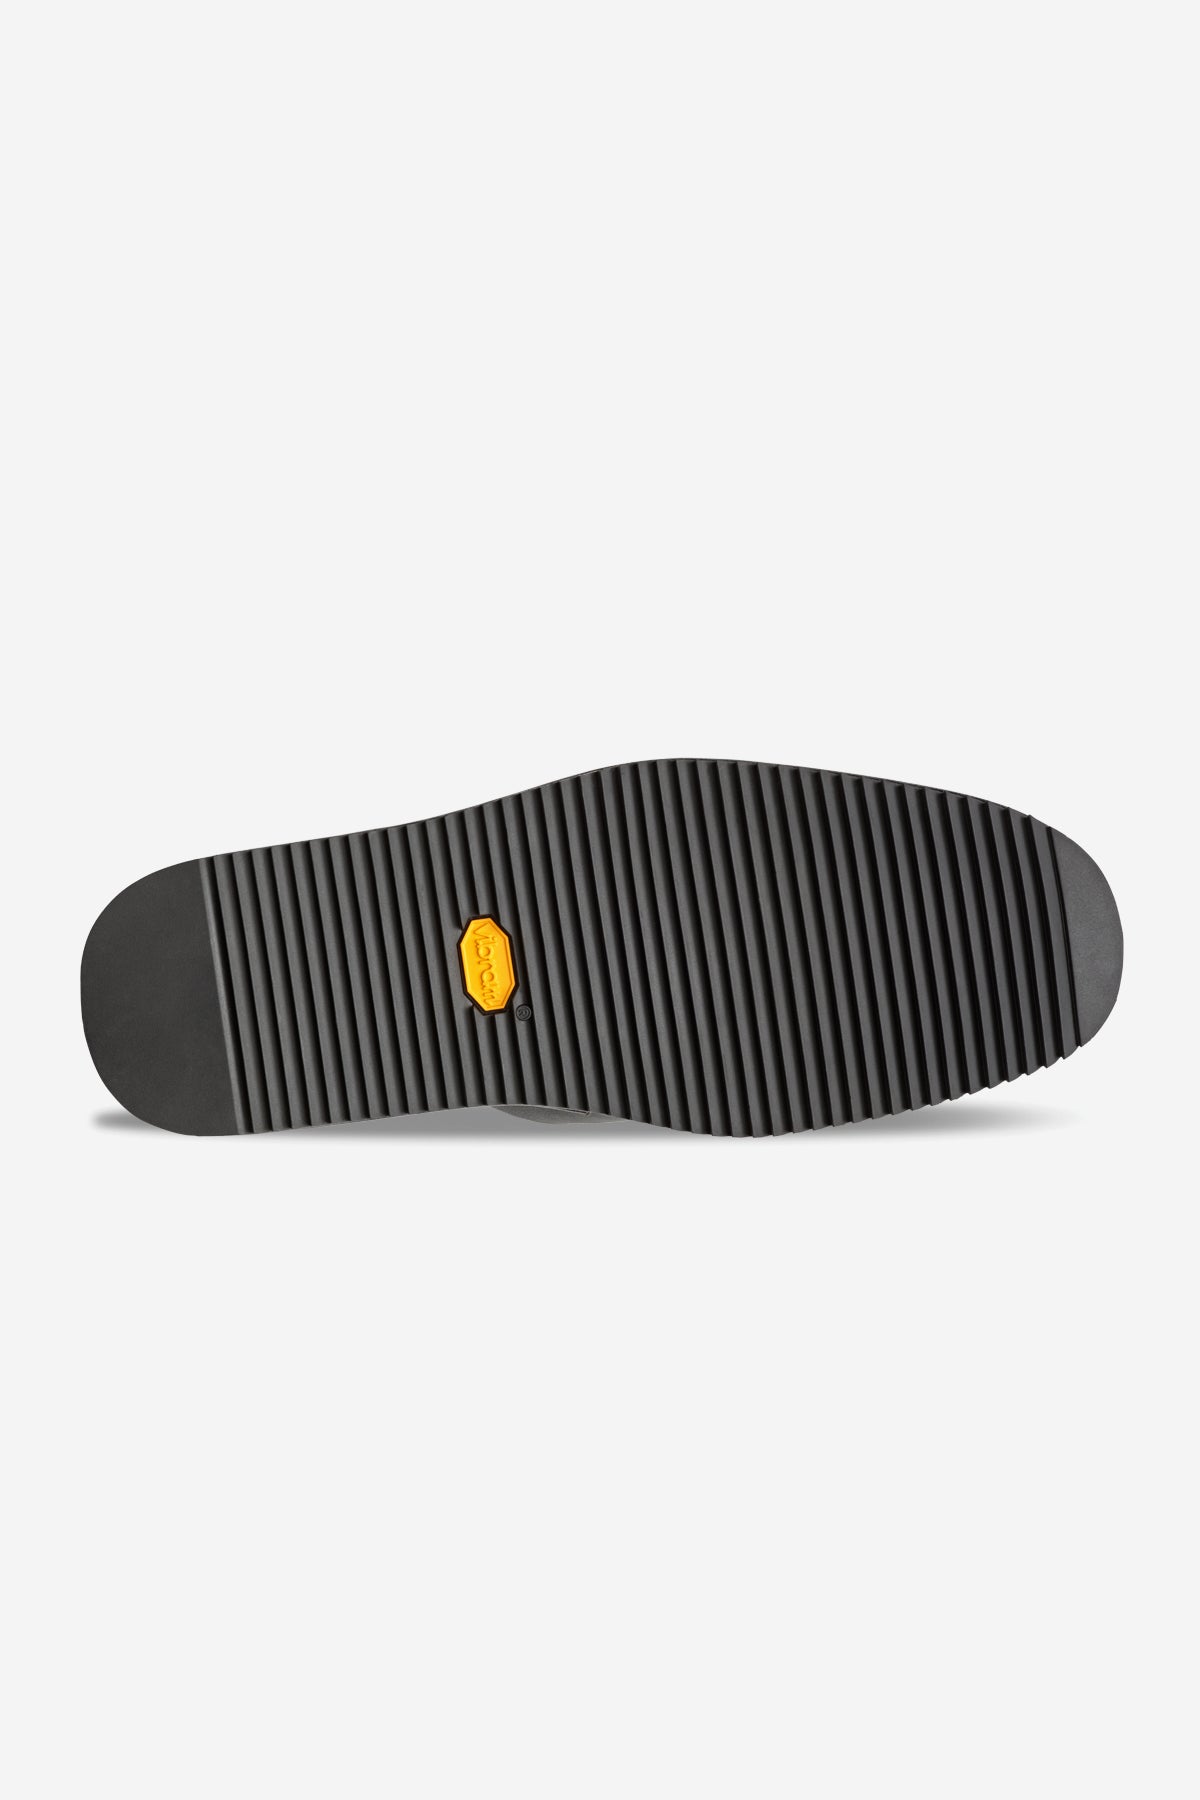 Globe - Mule - Preto/Former - skateboard Shoes